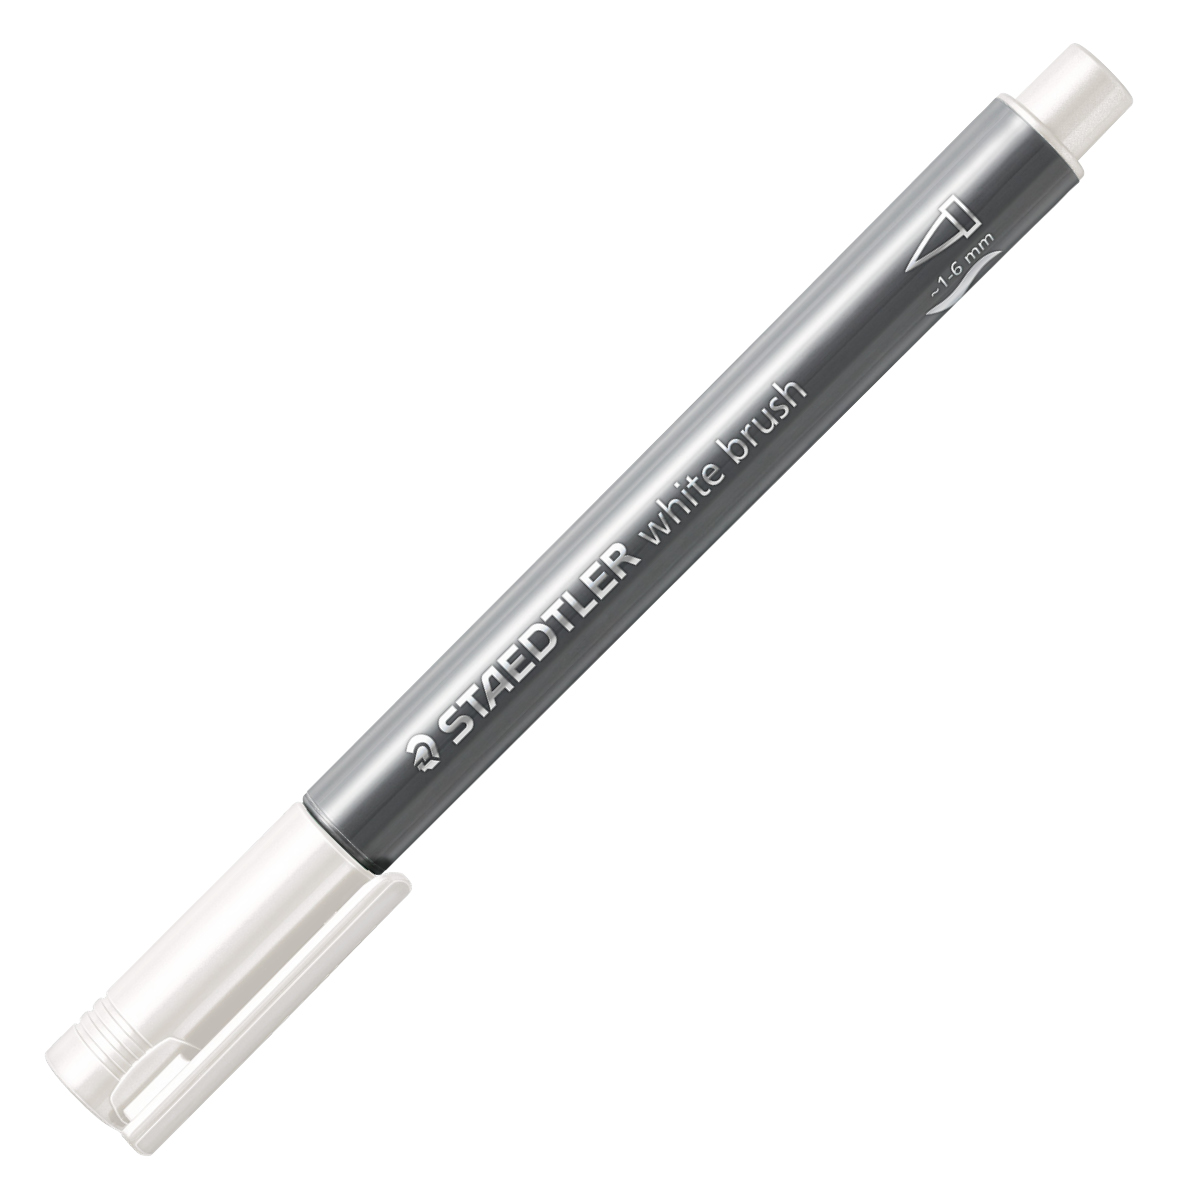 Marker Brush Metallic white in the group Pens / Artist Pens / Illustration Markers at Pen Store (126585)